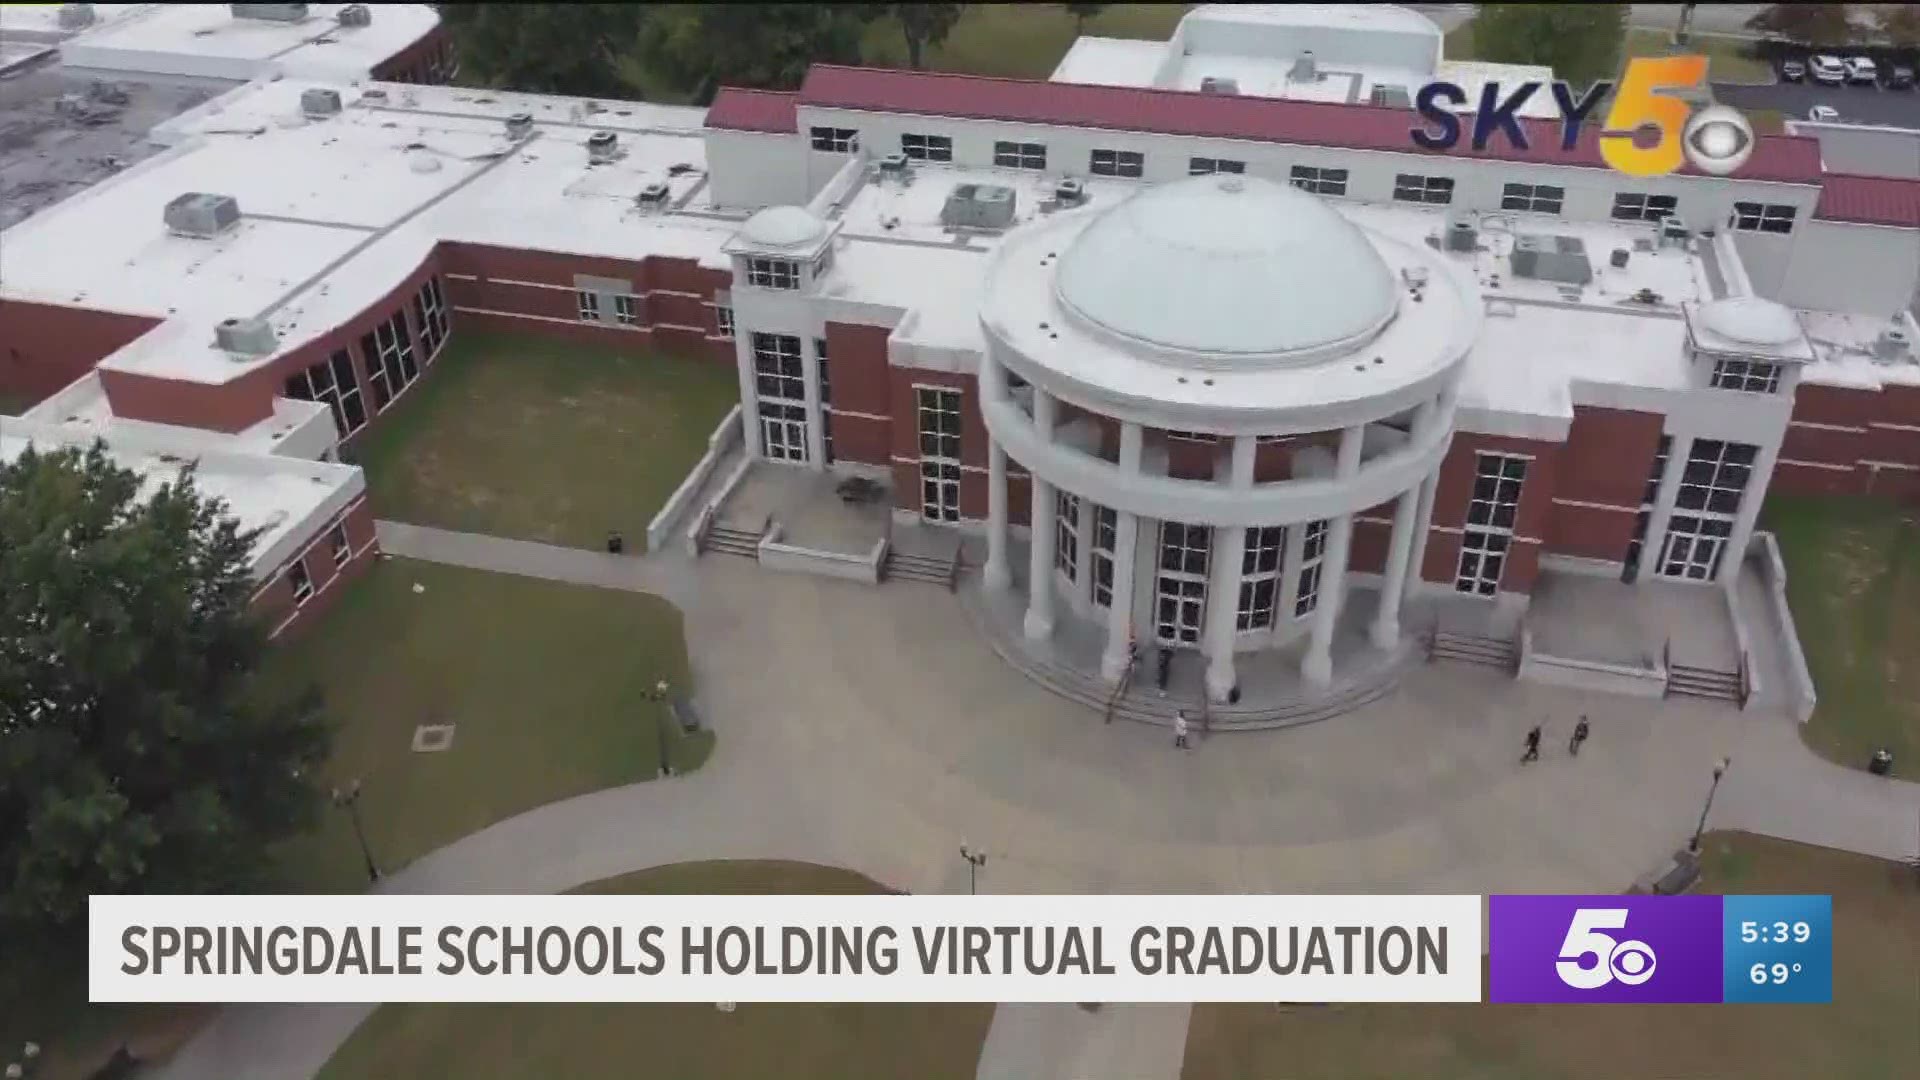 Springdale schools holding virtual graduation.